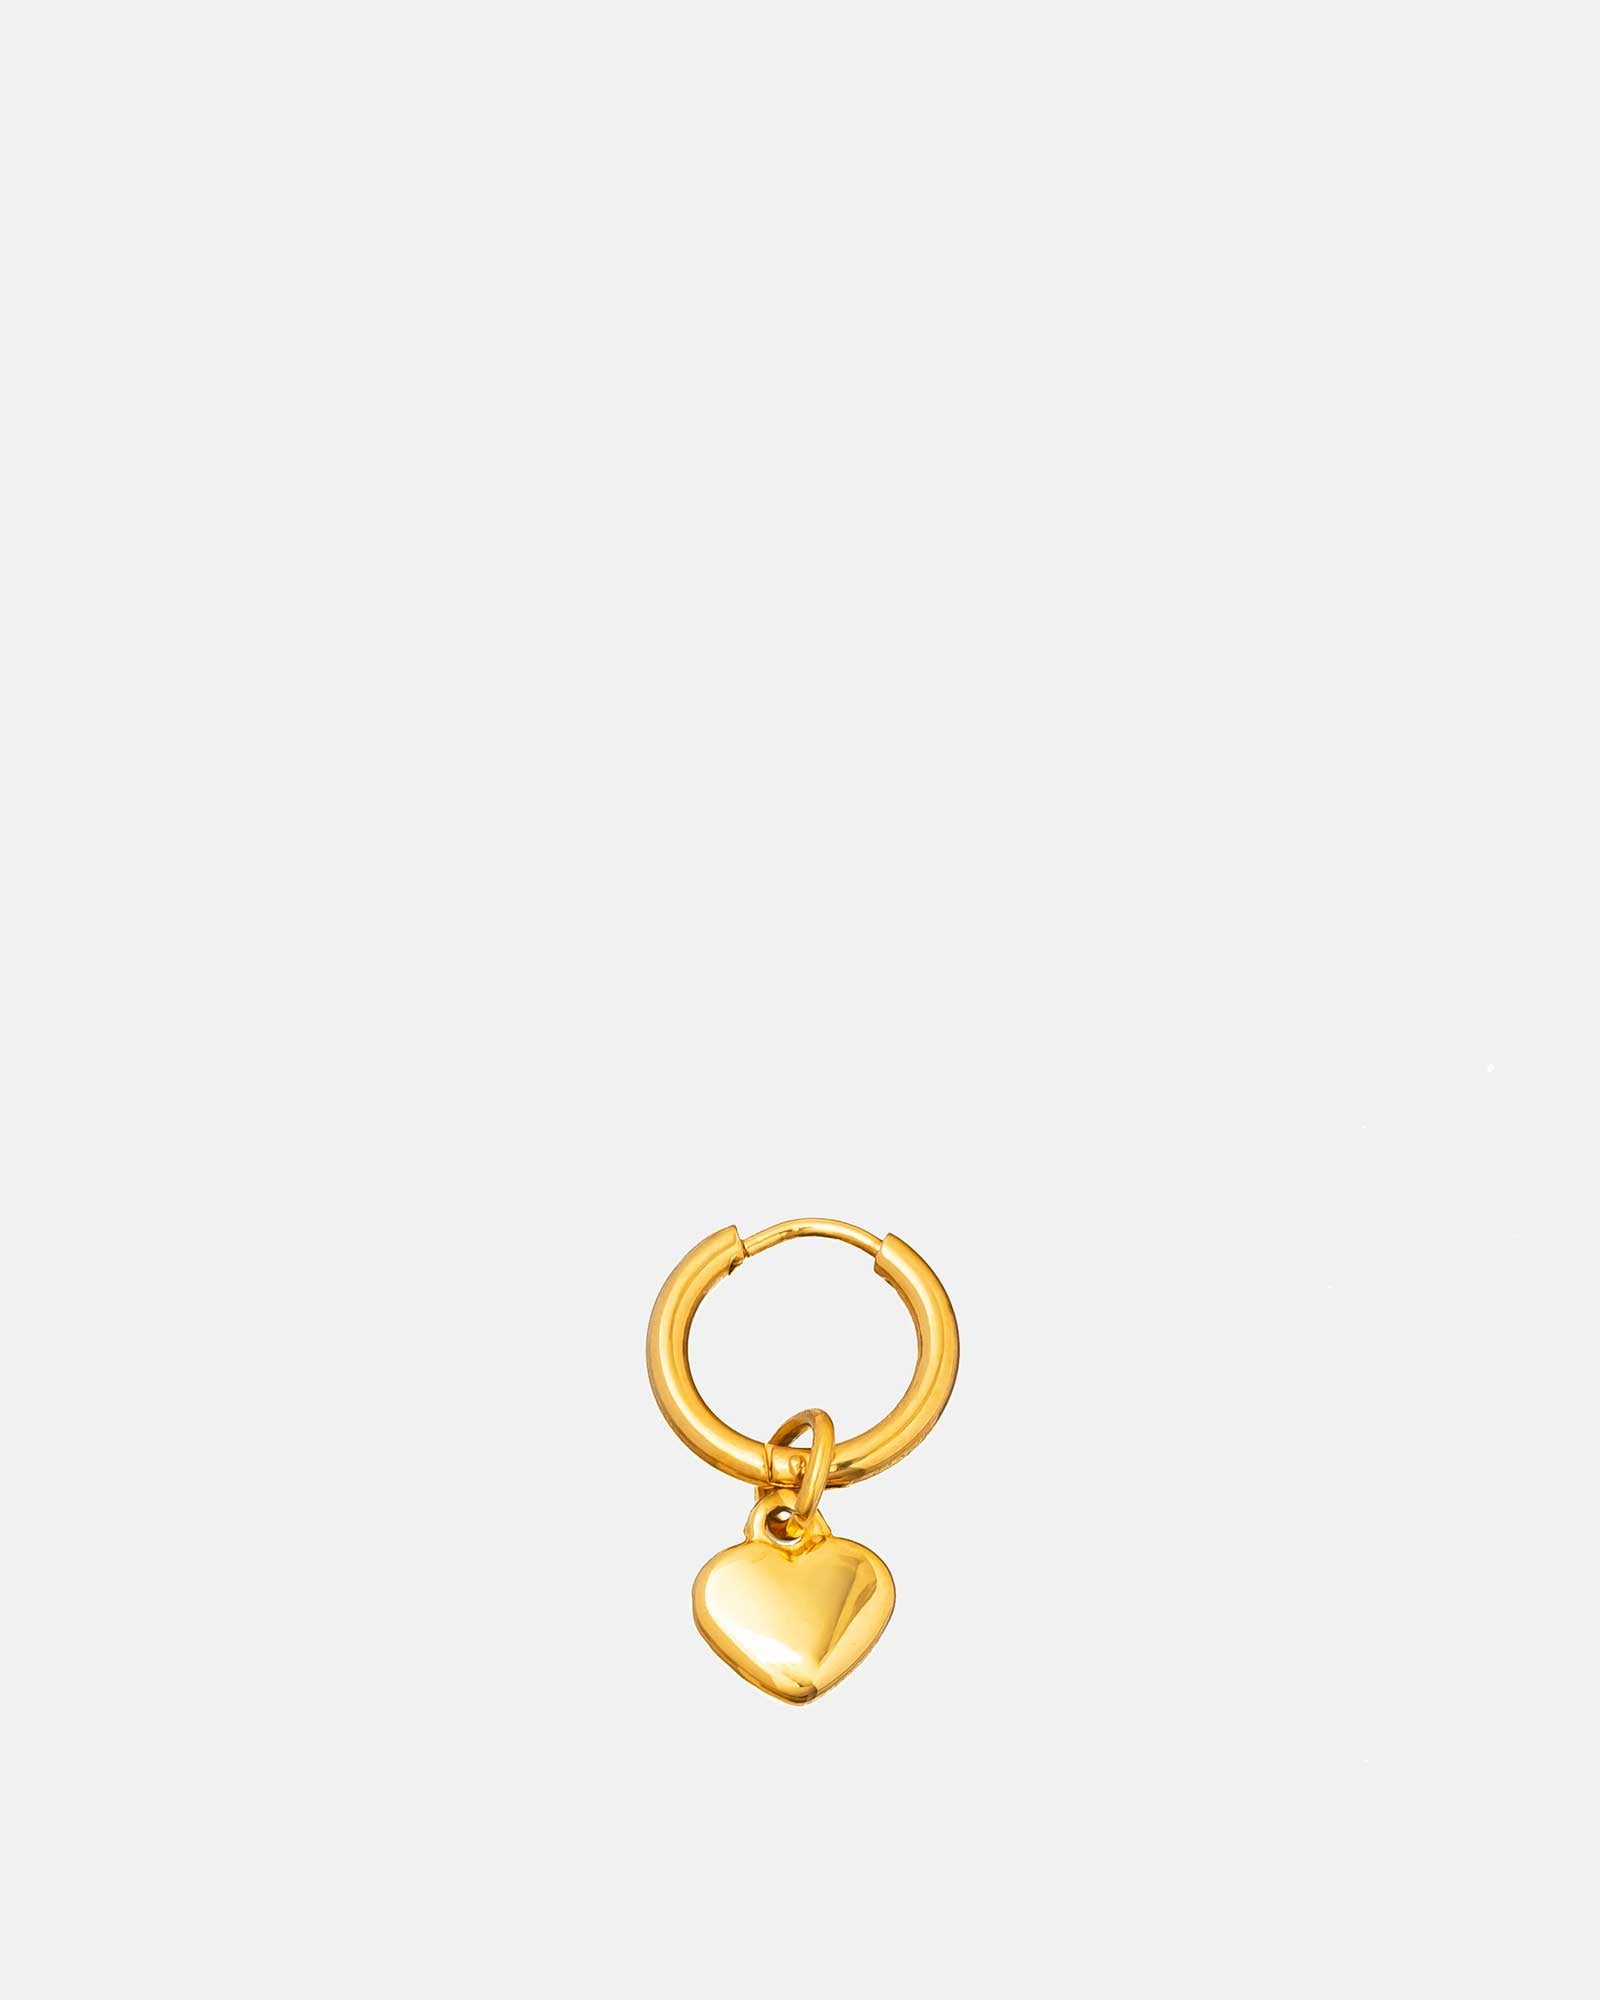   New in Heart - Golden Stainless Steel Earring - Online Unissex Jewelry - Dicci